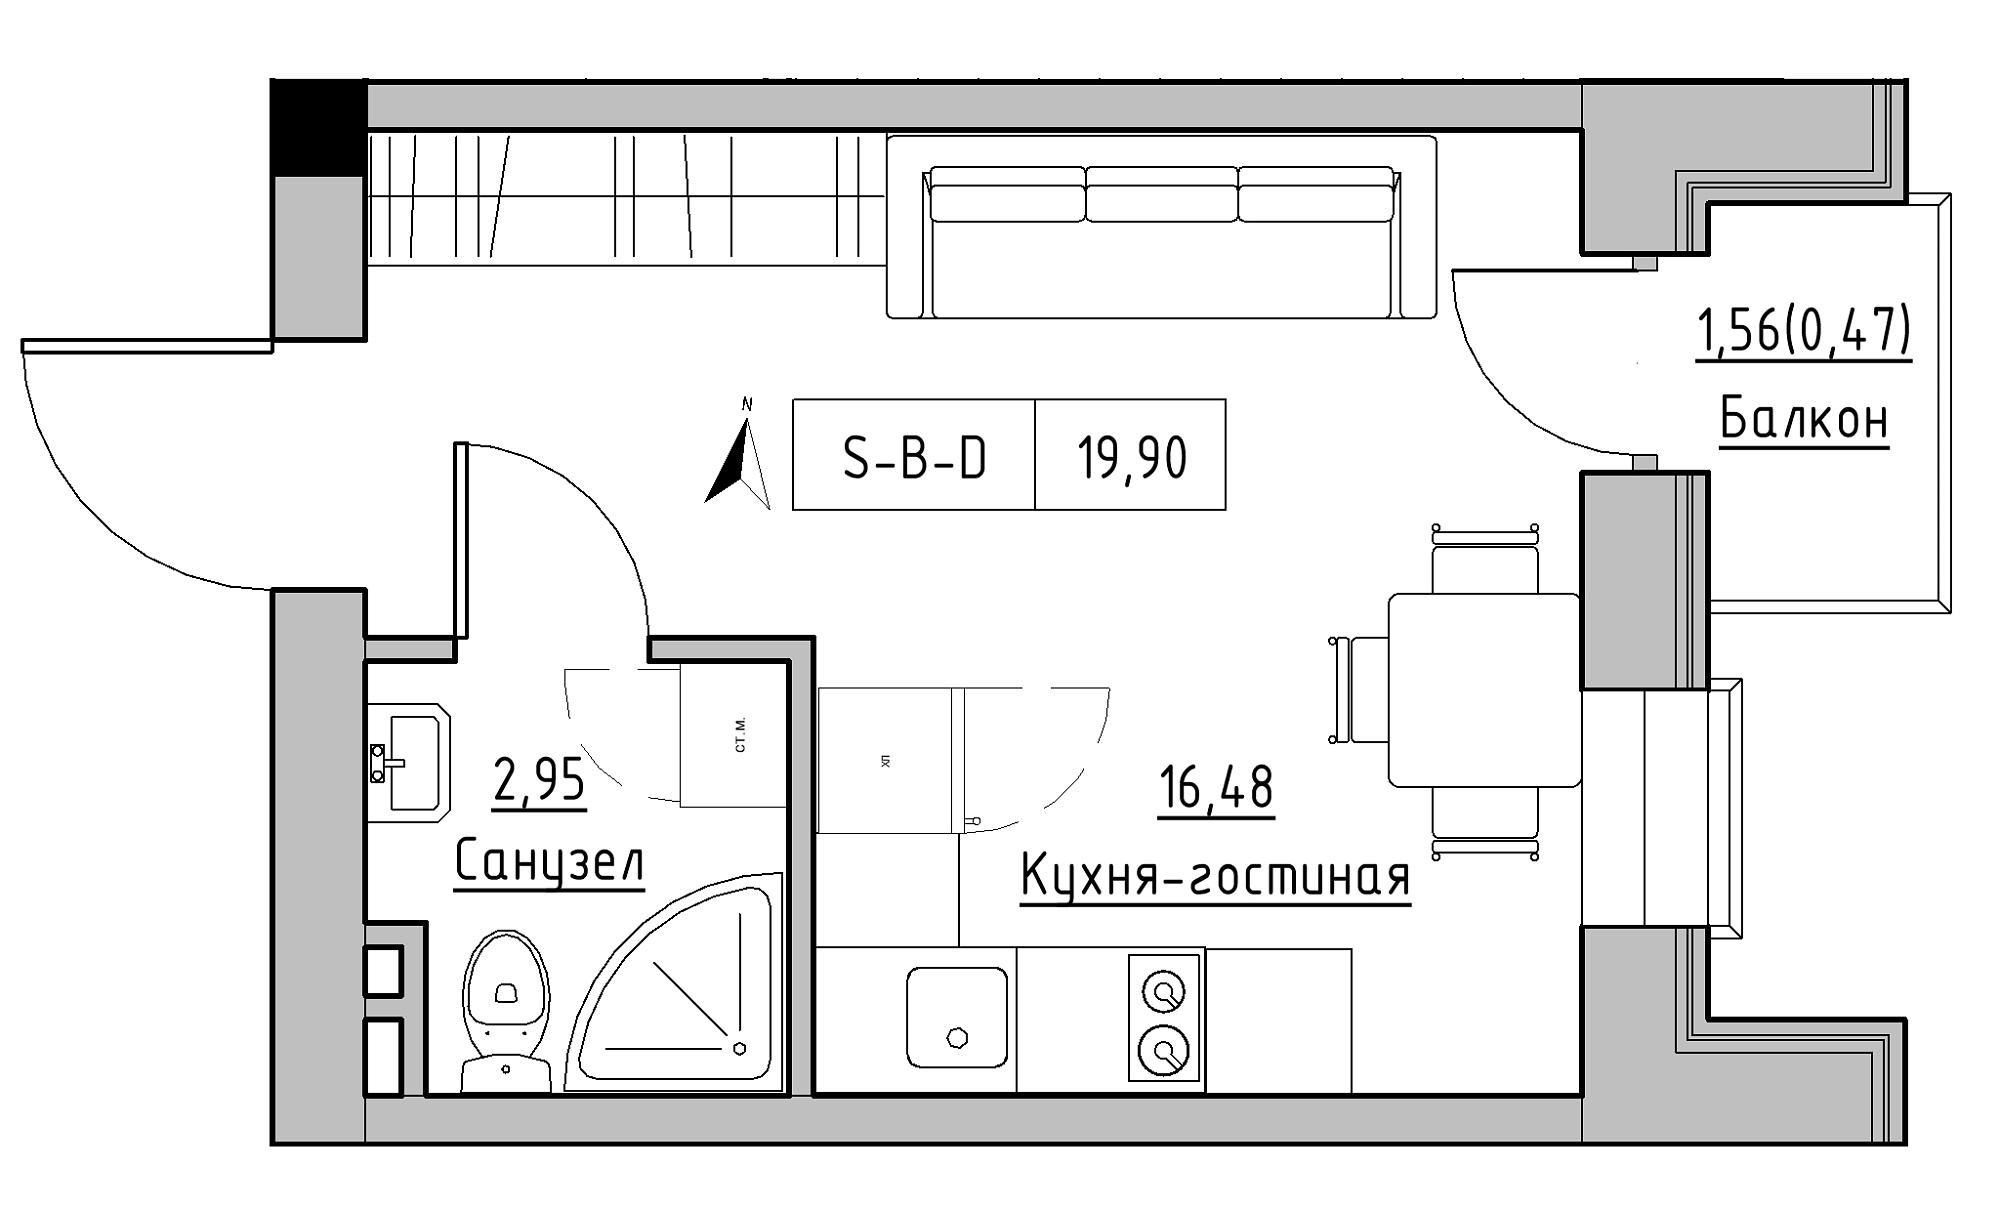 Planning Smart flats area 19.9m2, KS-023-03/0006.